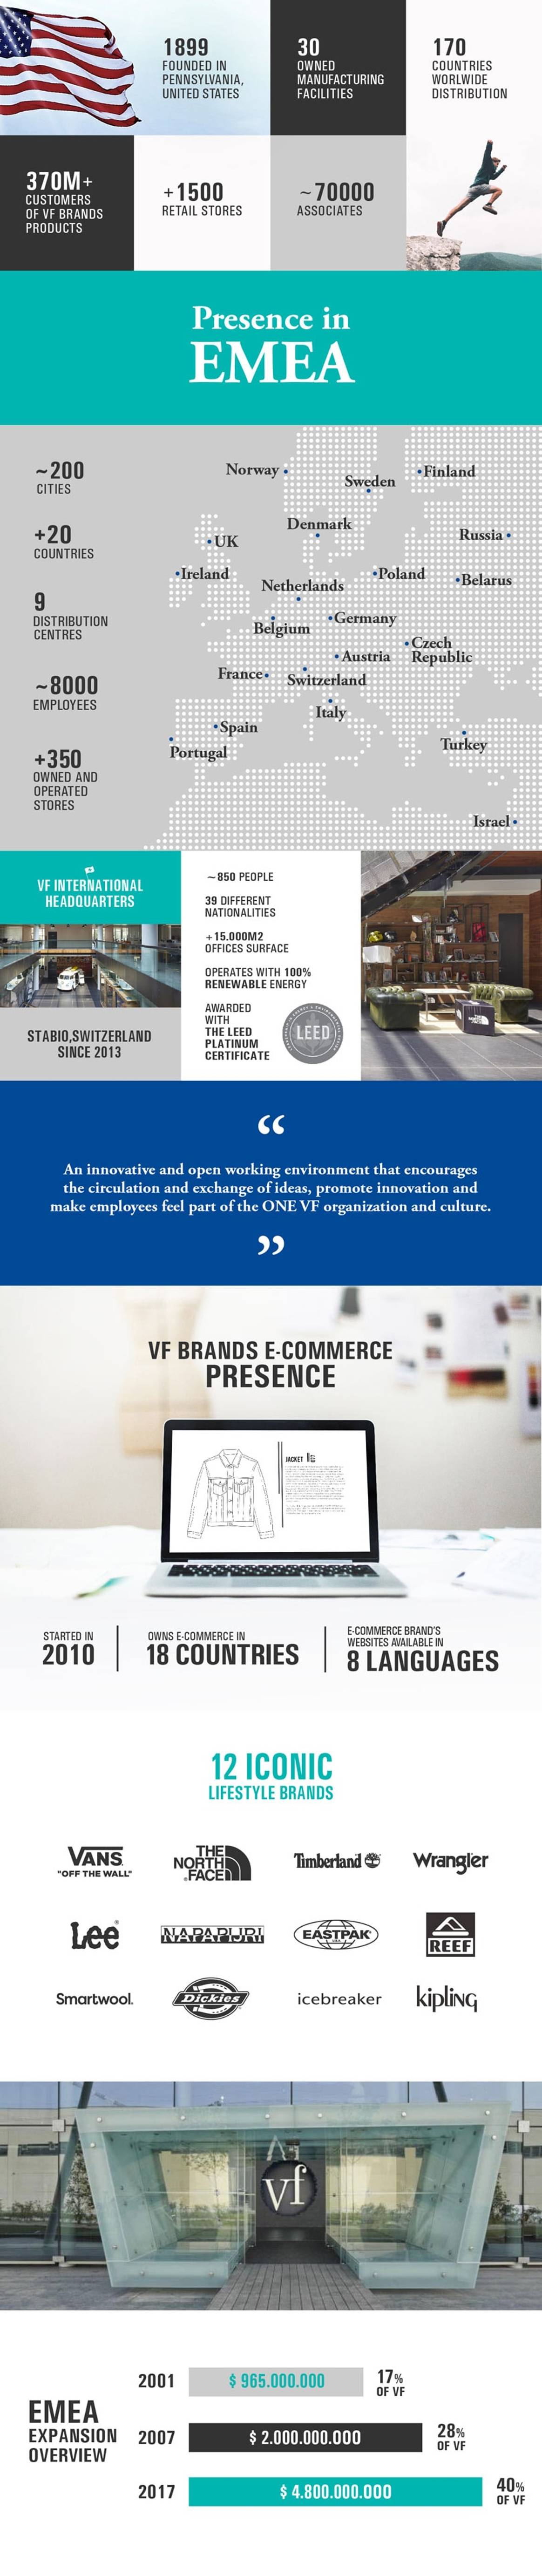 Infographic: VF Corporation - a global brand powerhouse